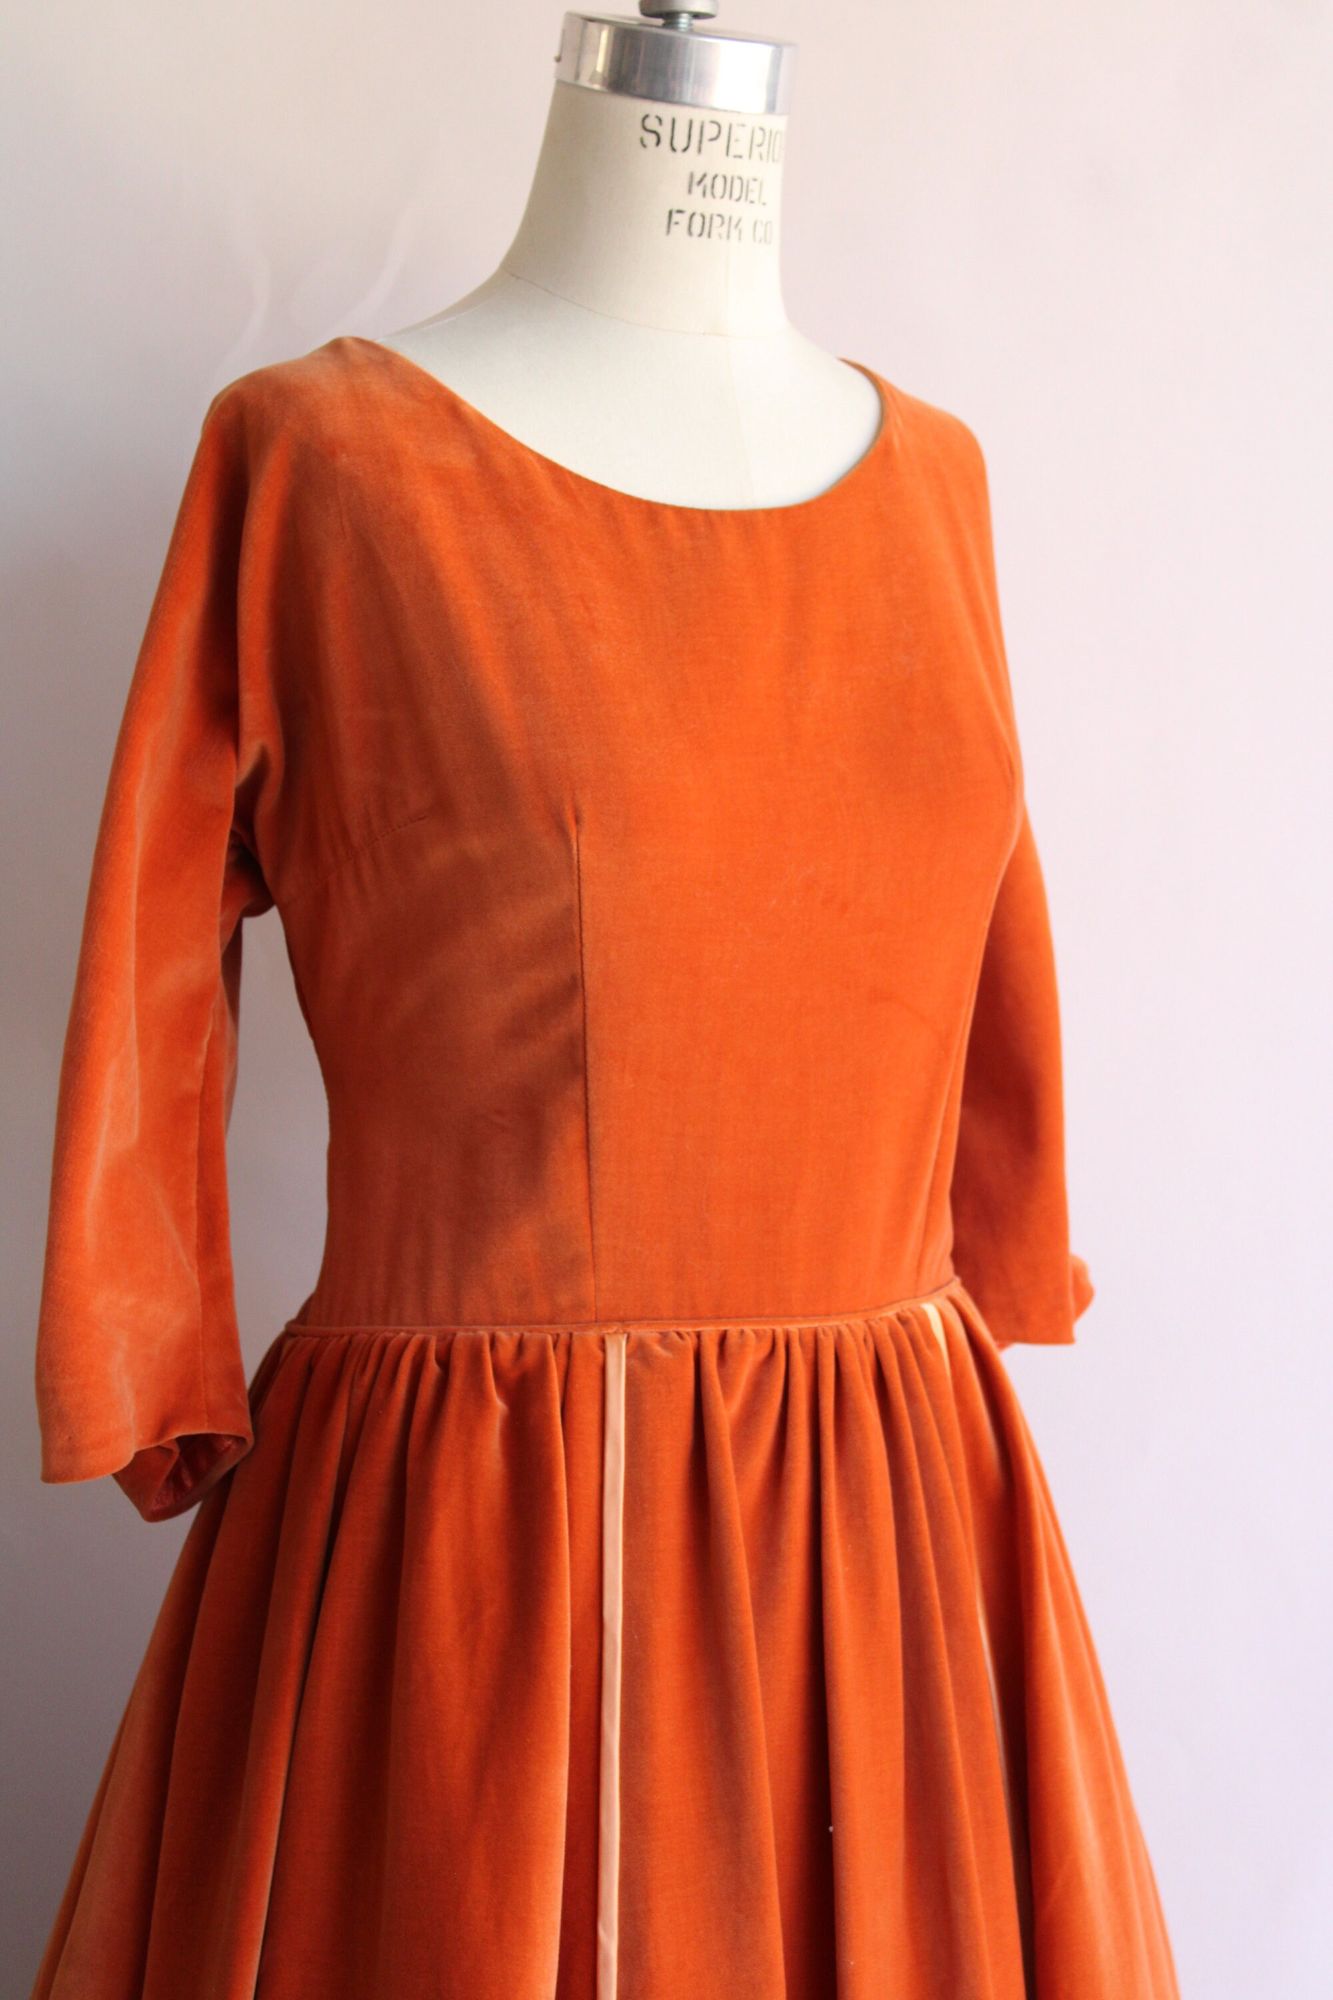 Vintage 1950s  VOLUP Emma Domb Orange Velvet and Satin Party Dress